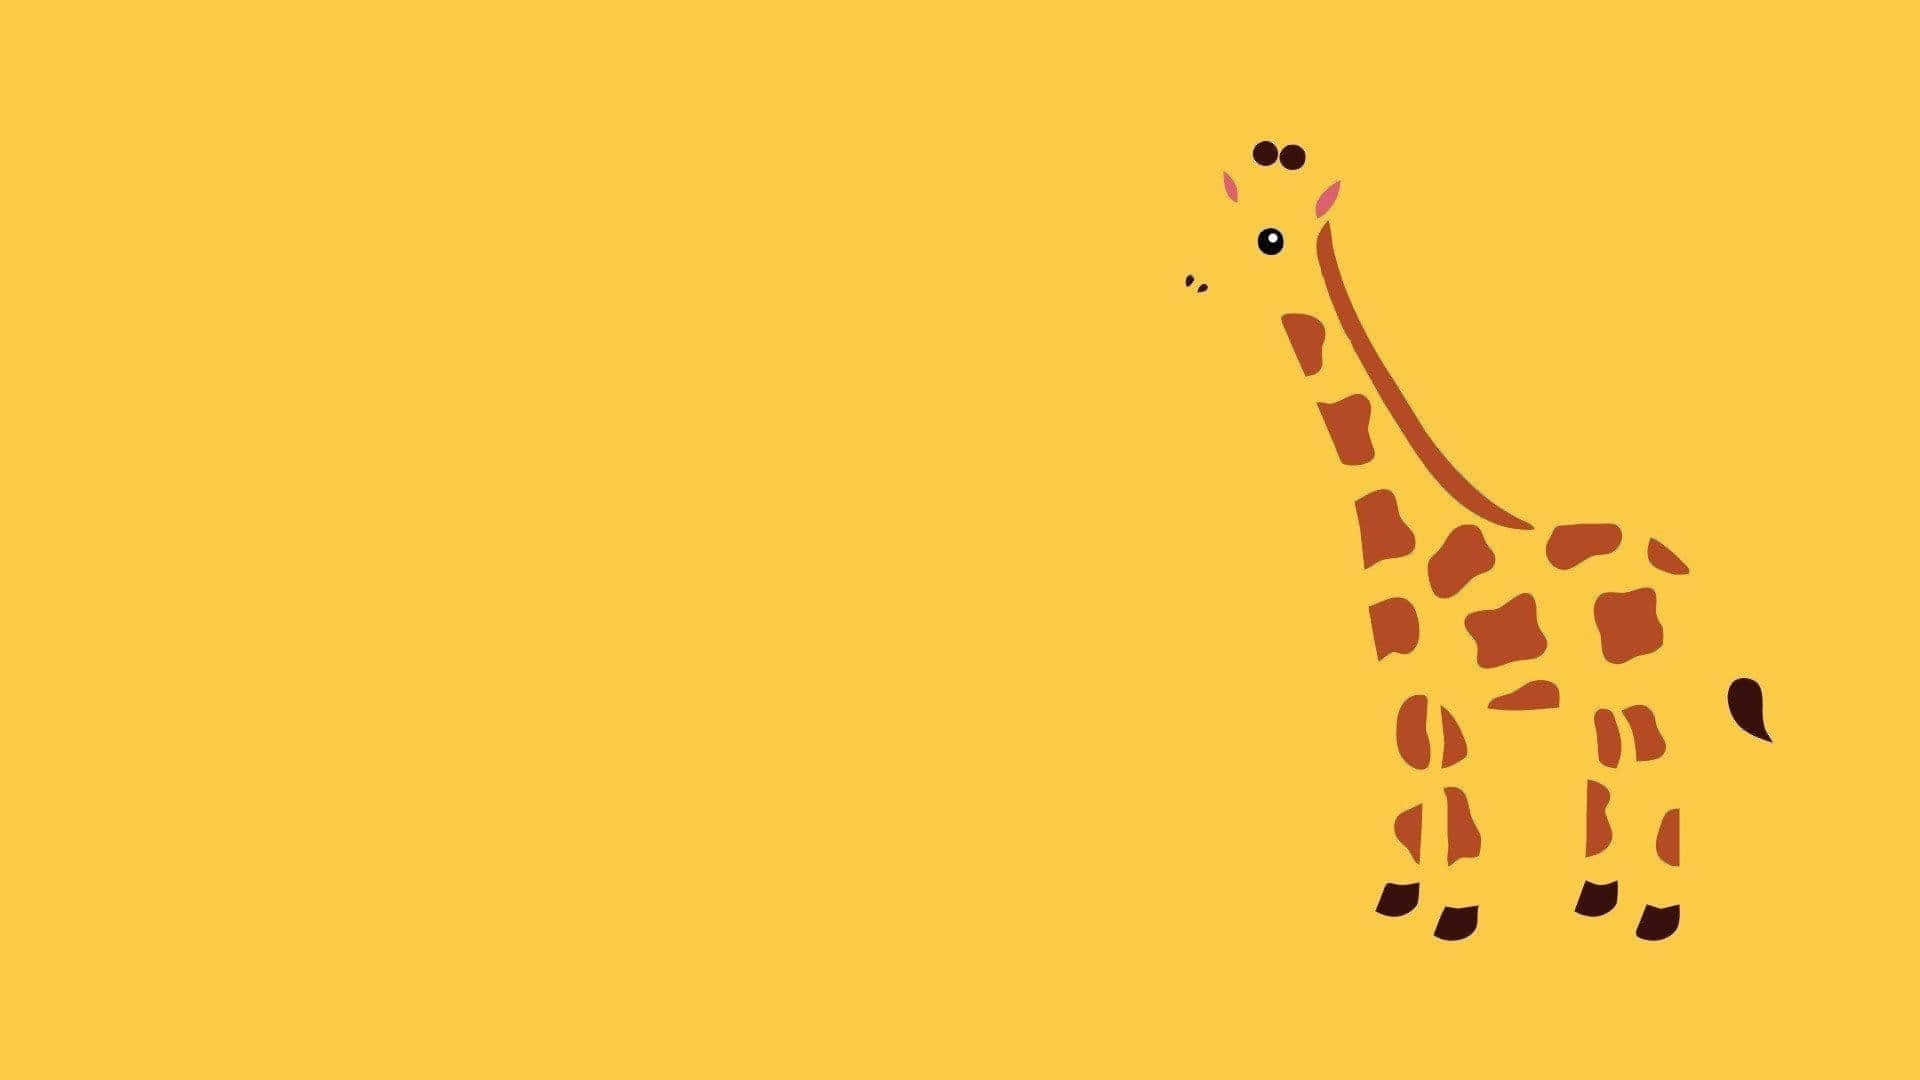 A Giraffe Standing On A Yellow Background